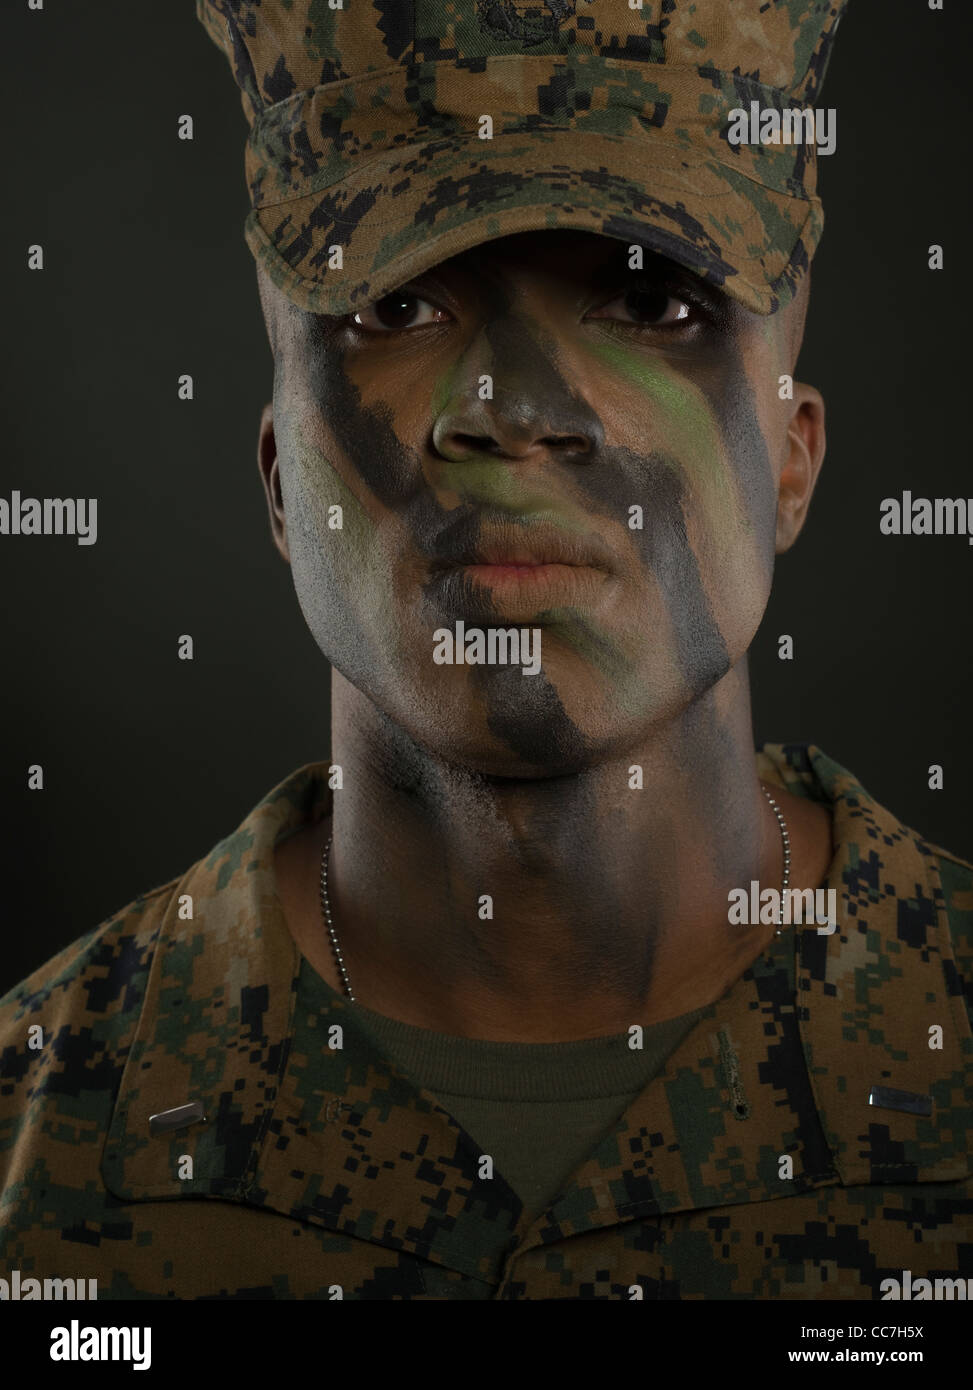 Stati Uniti Marine Corps Officer in MARPAT digital camouflage uniforme e camo face paint Foto Stock